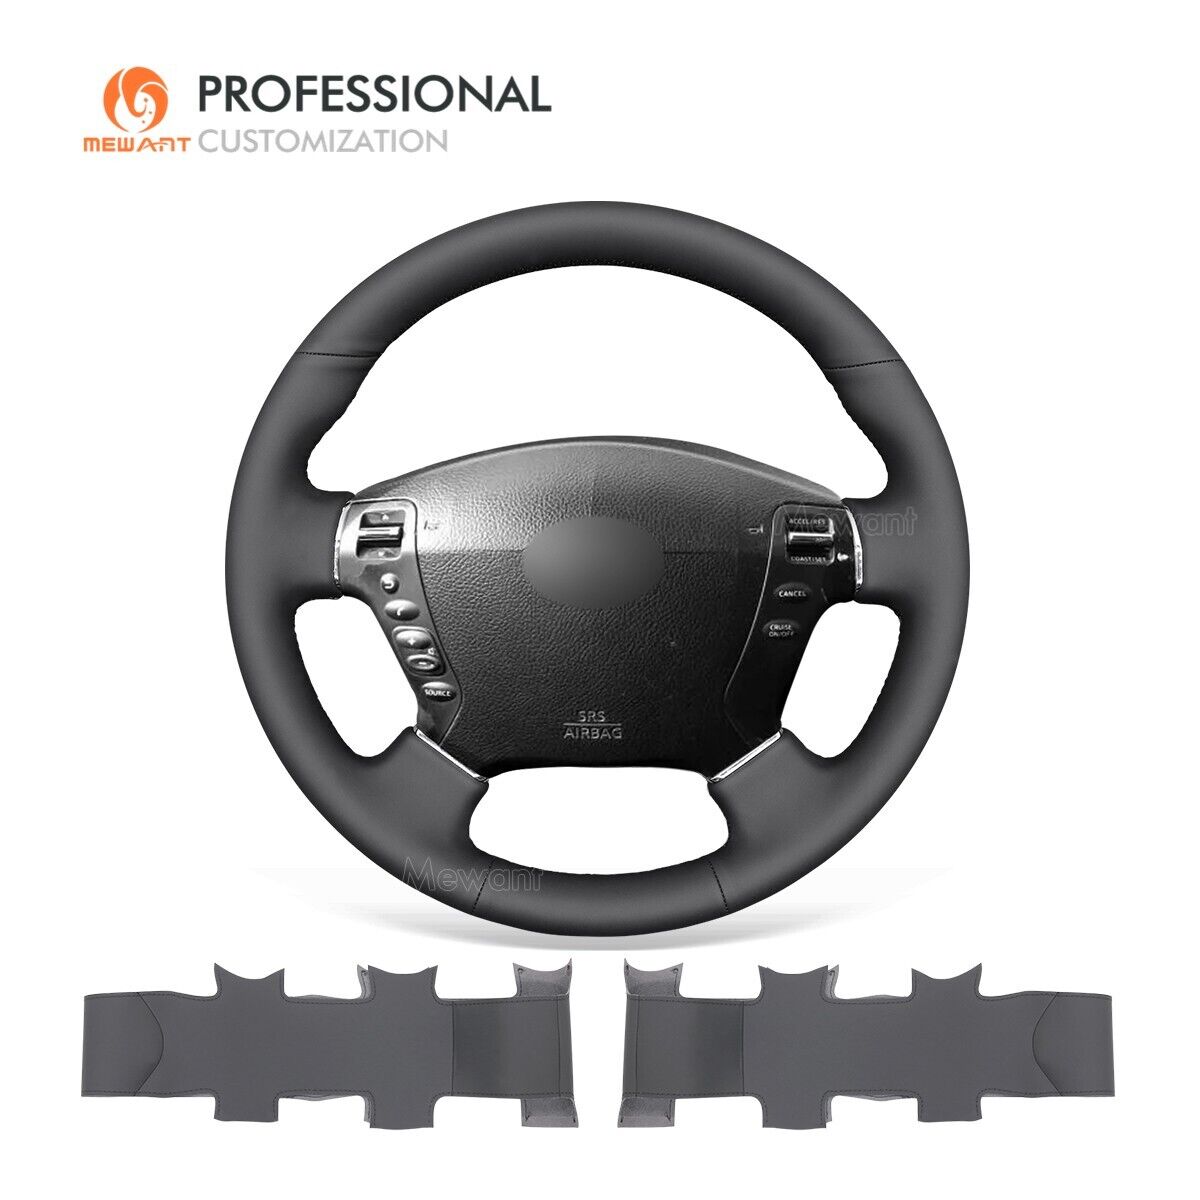 MEWANT Hnad Stitch Black PU Leather Steering Wheel Cover for Nissan Fuga Cima